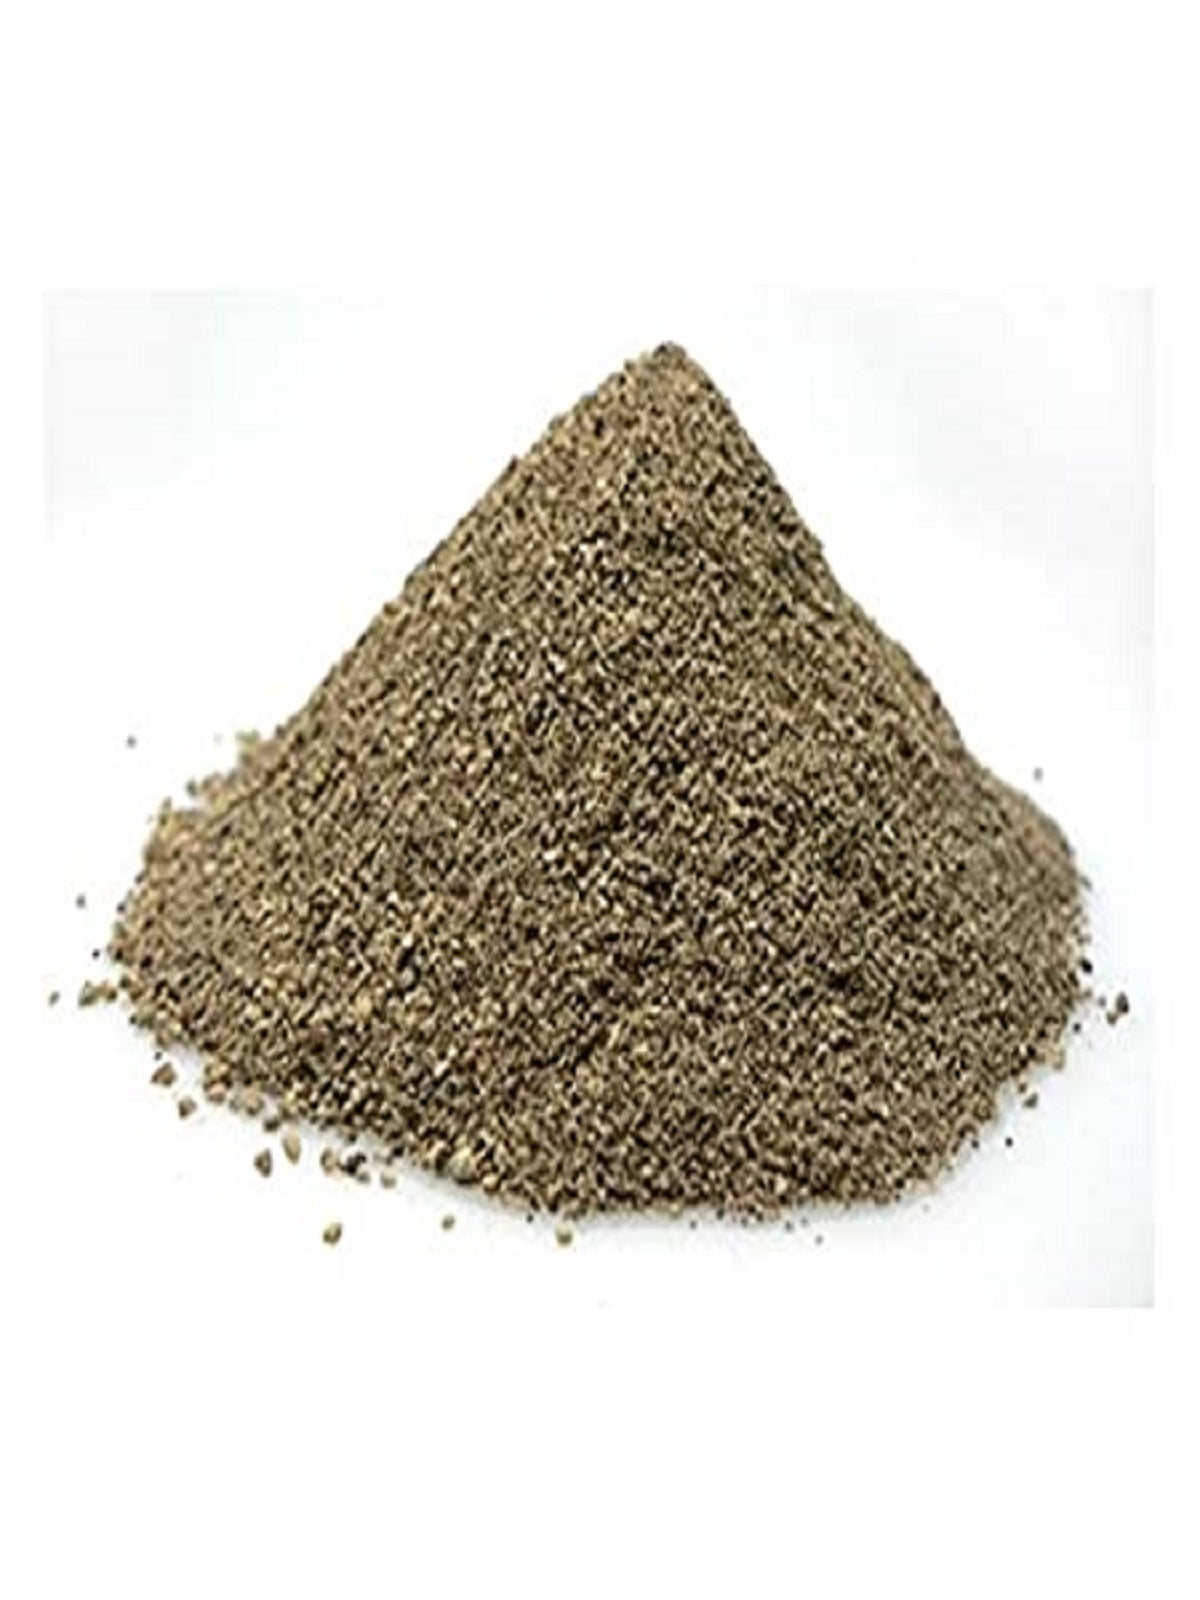 Buy the best quality Kali Mirch /Black Pepper powder online at Farmonics